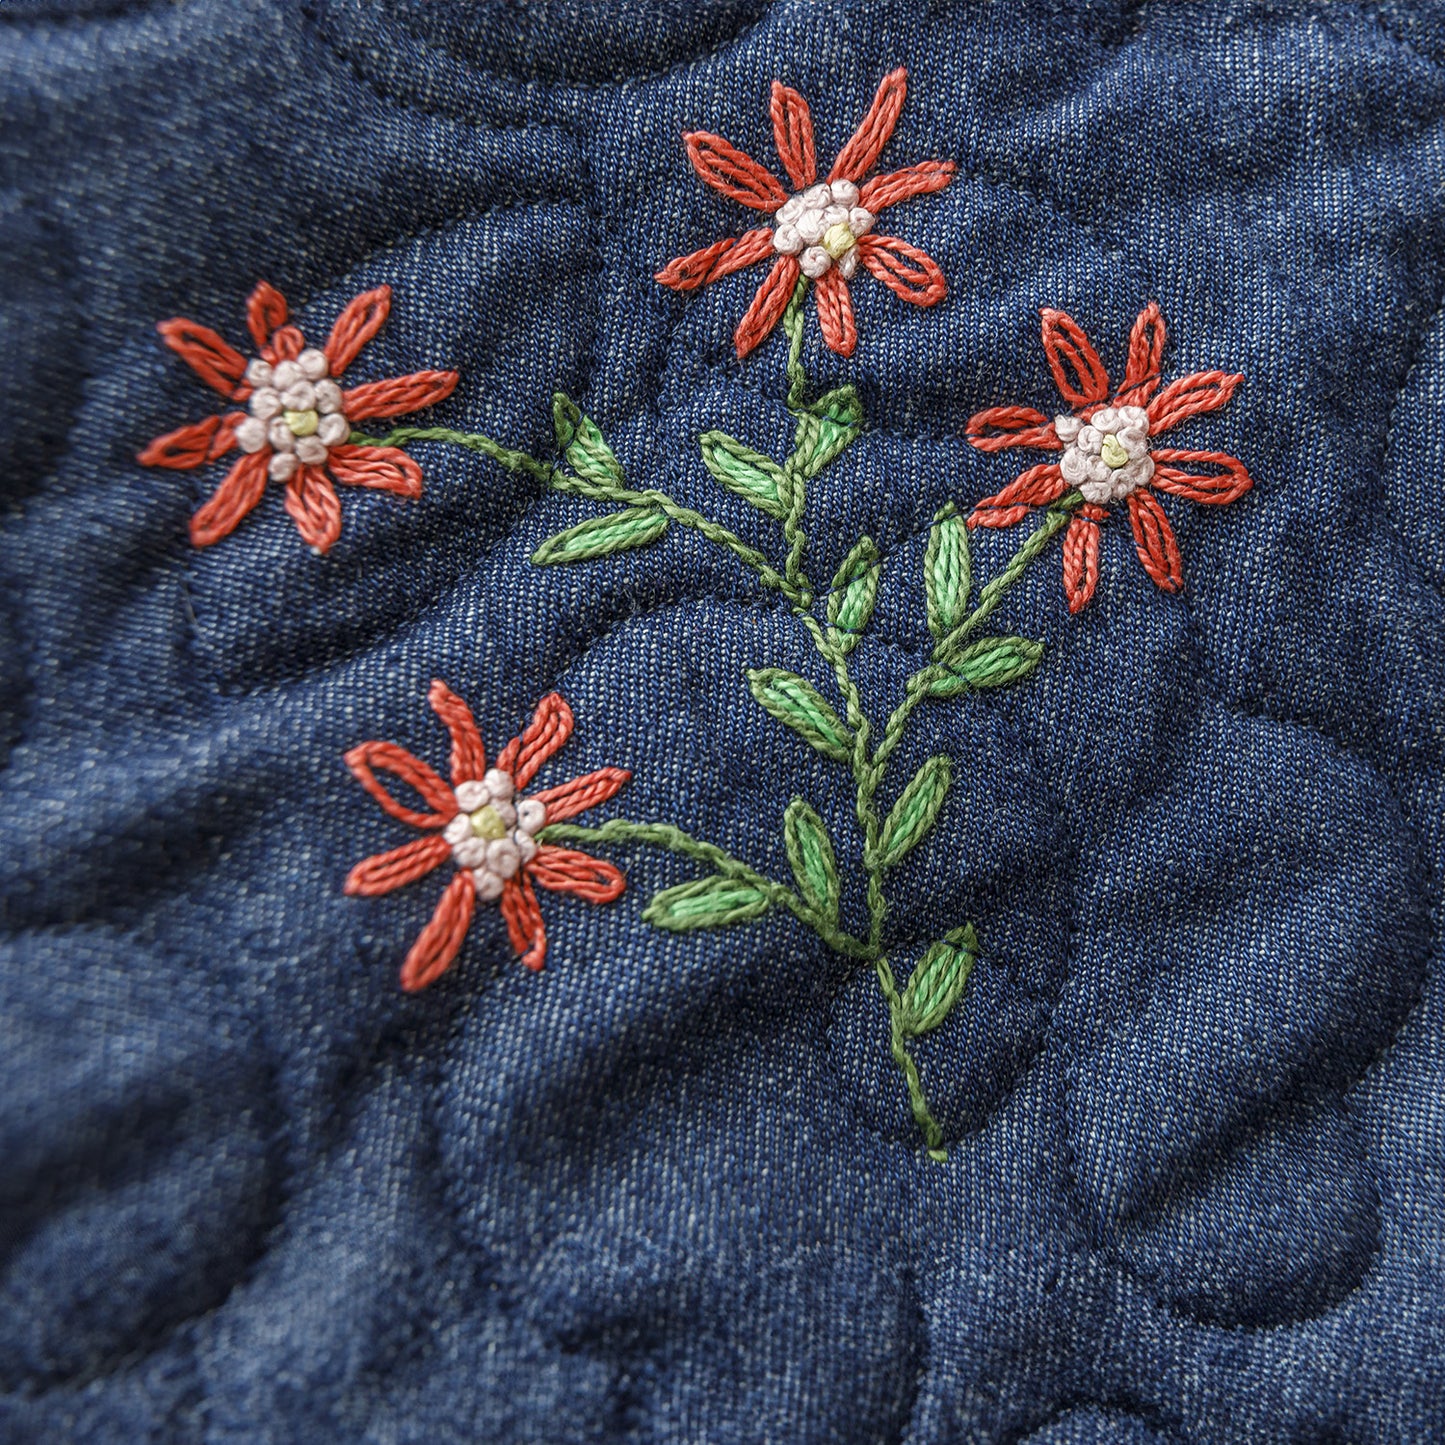 PREORDER - Ingrid's Wildflowers - An Heirloom Embroidery Kit by Missouri Star Alternative View #27